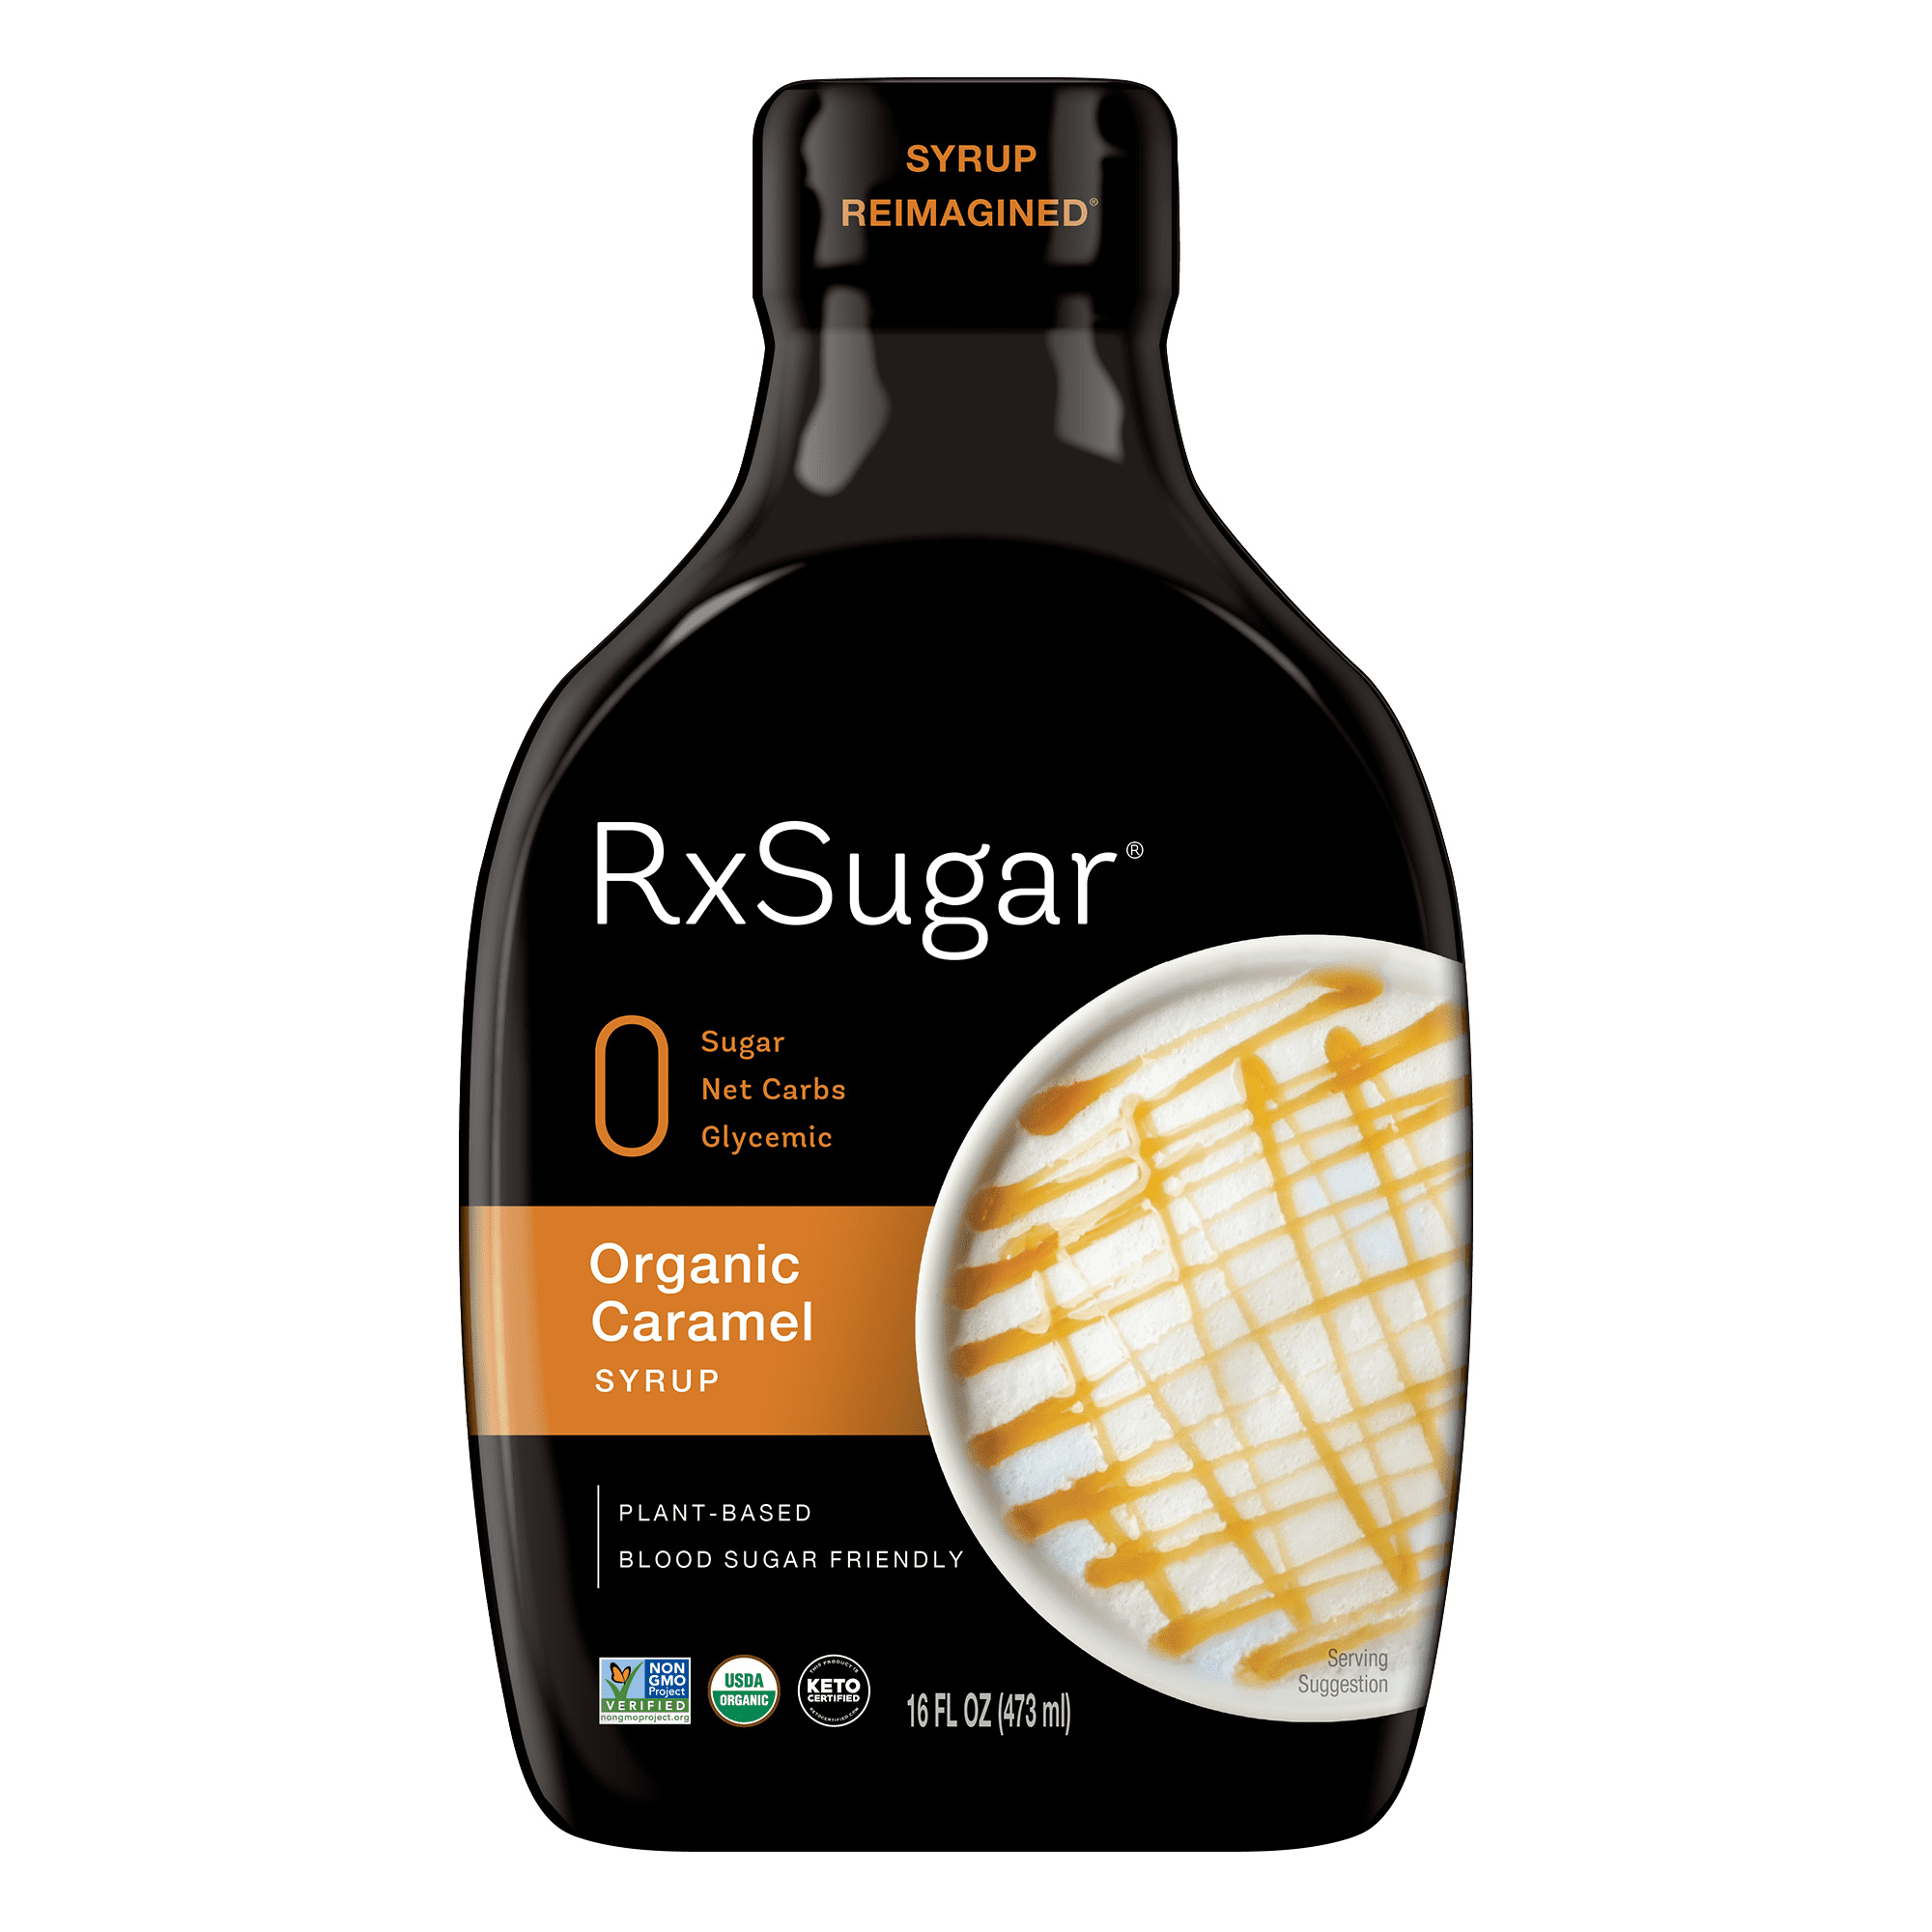 RxSugar Organic Caramel Syrup 6 units per case 16.0 oz